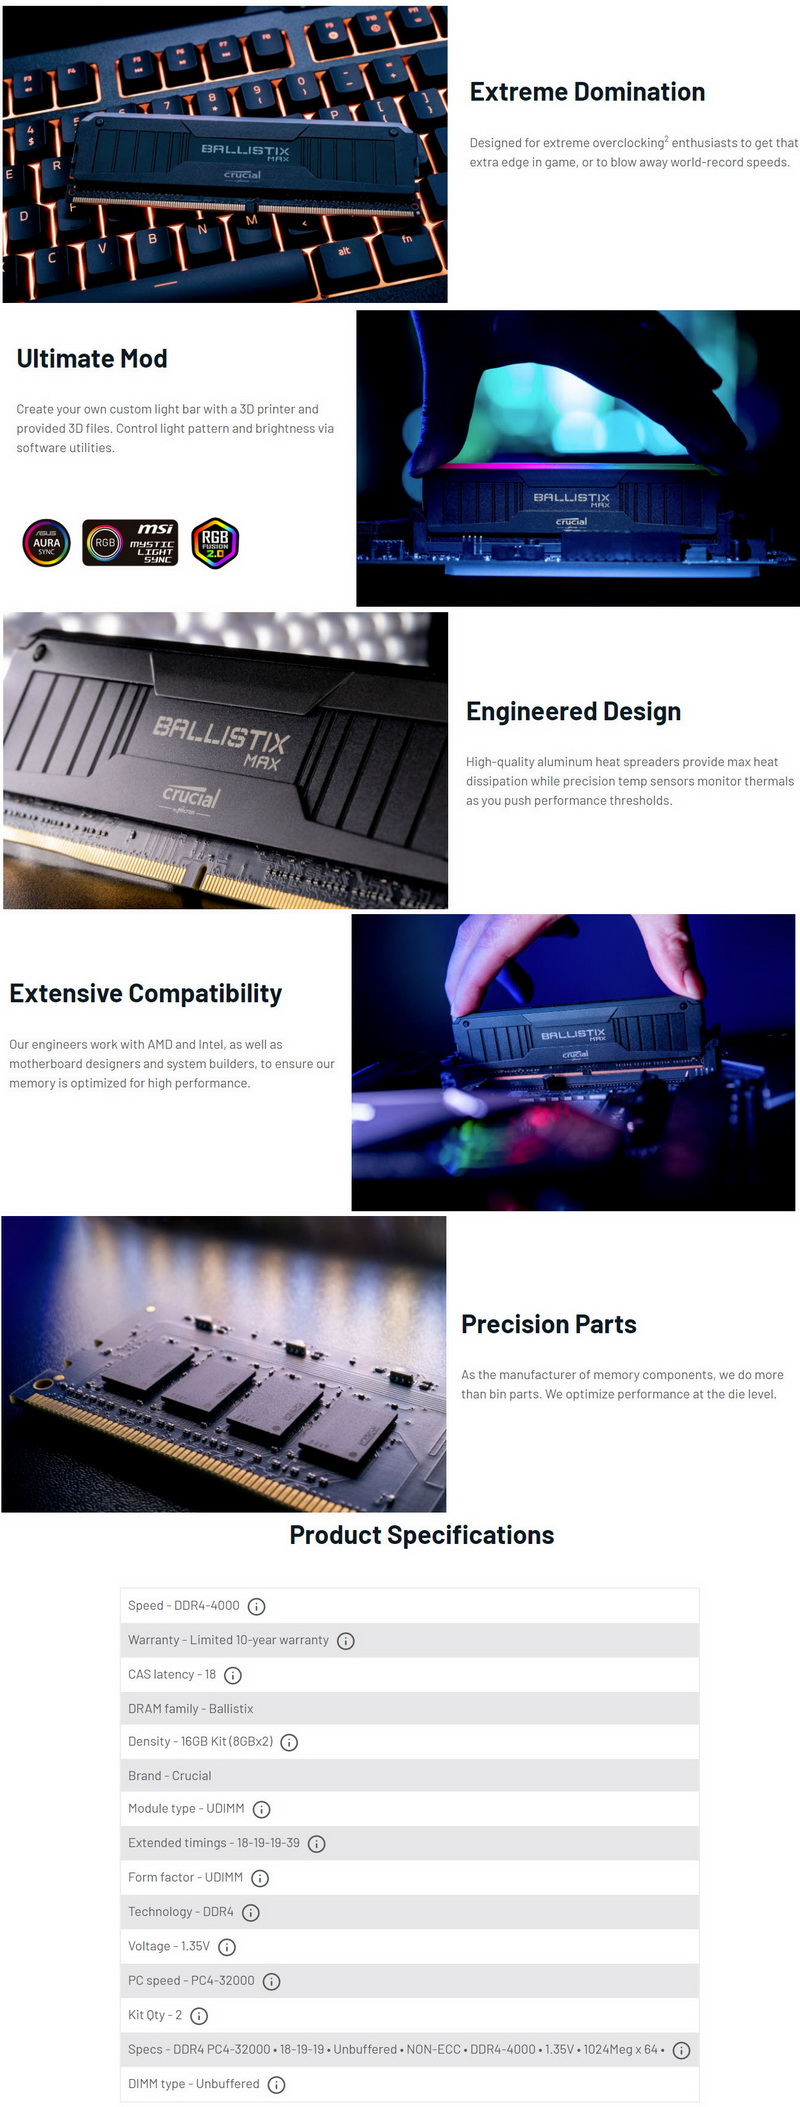 DDR4, DRAM, Specs & Features